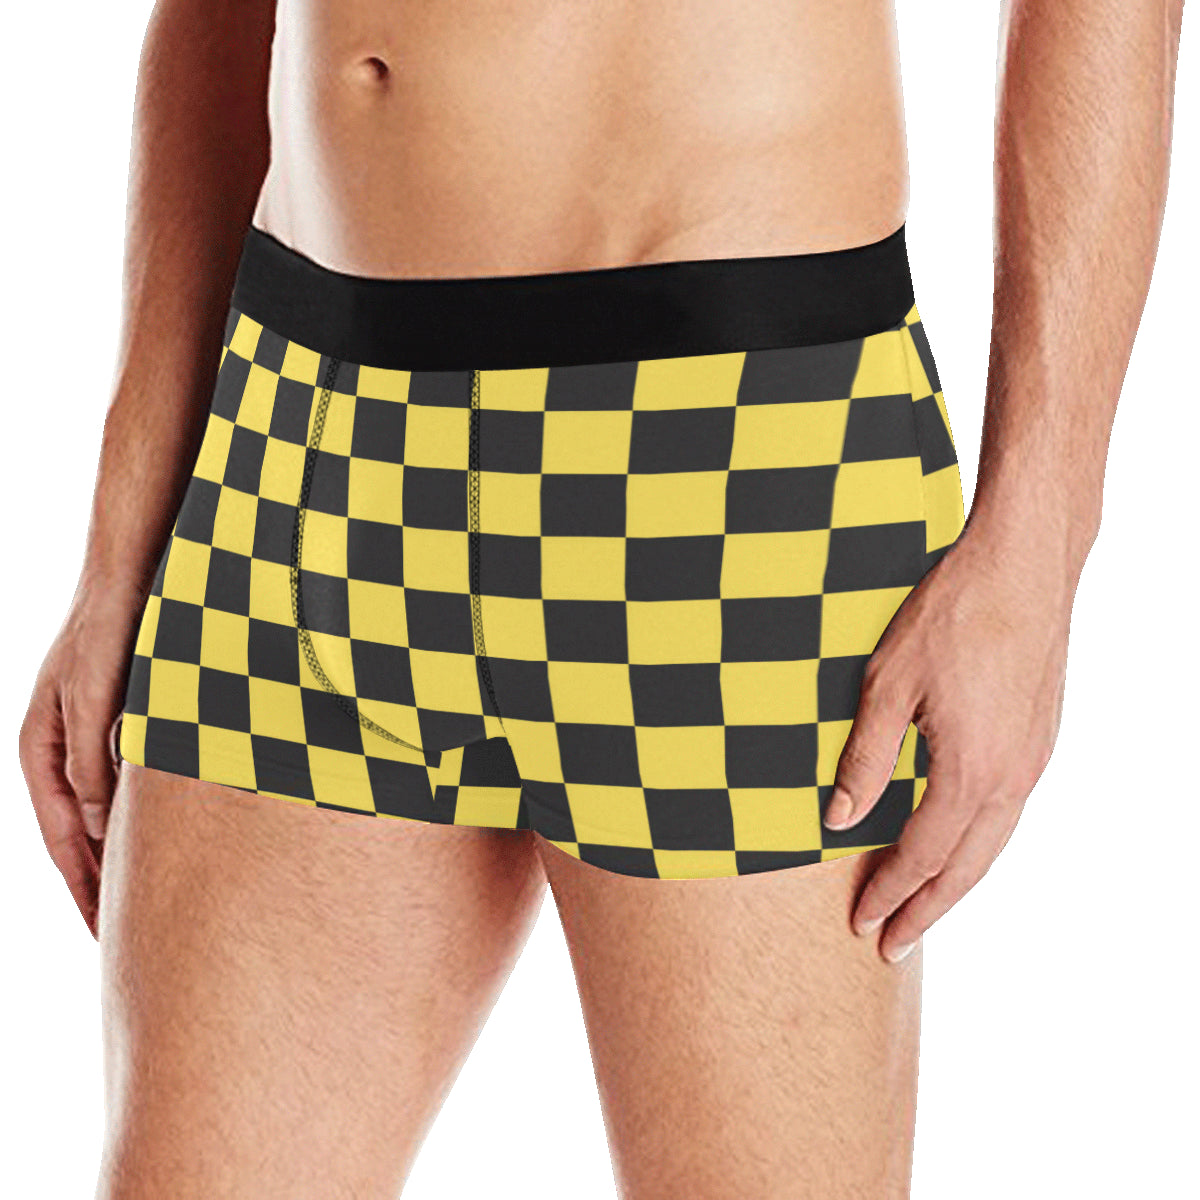 Checkered Yellow Pattern Print Design 03 Men's Boxer Briefs